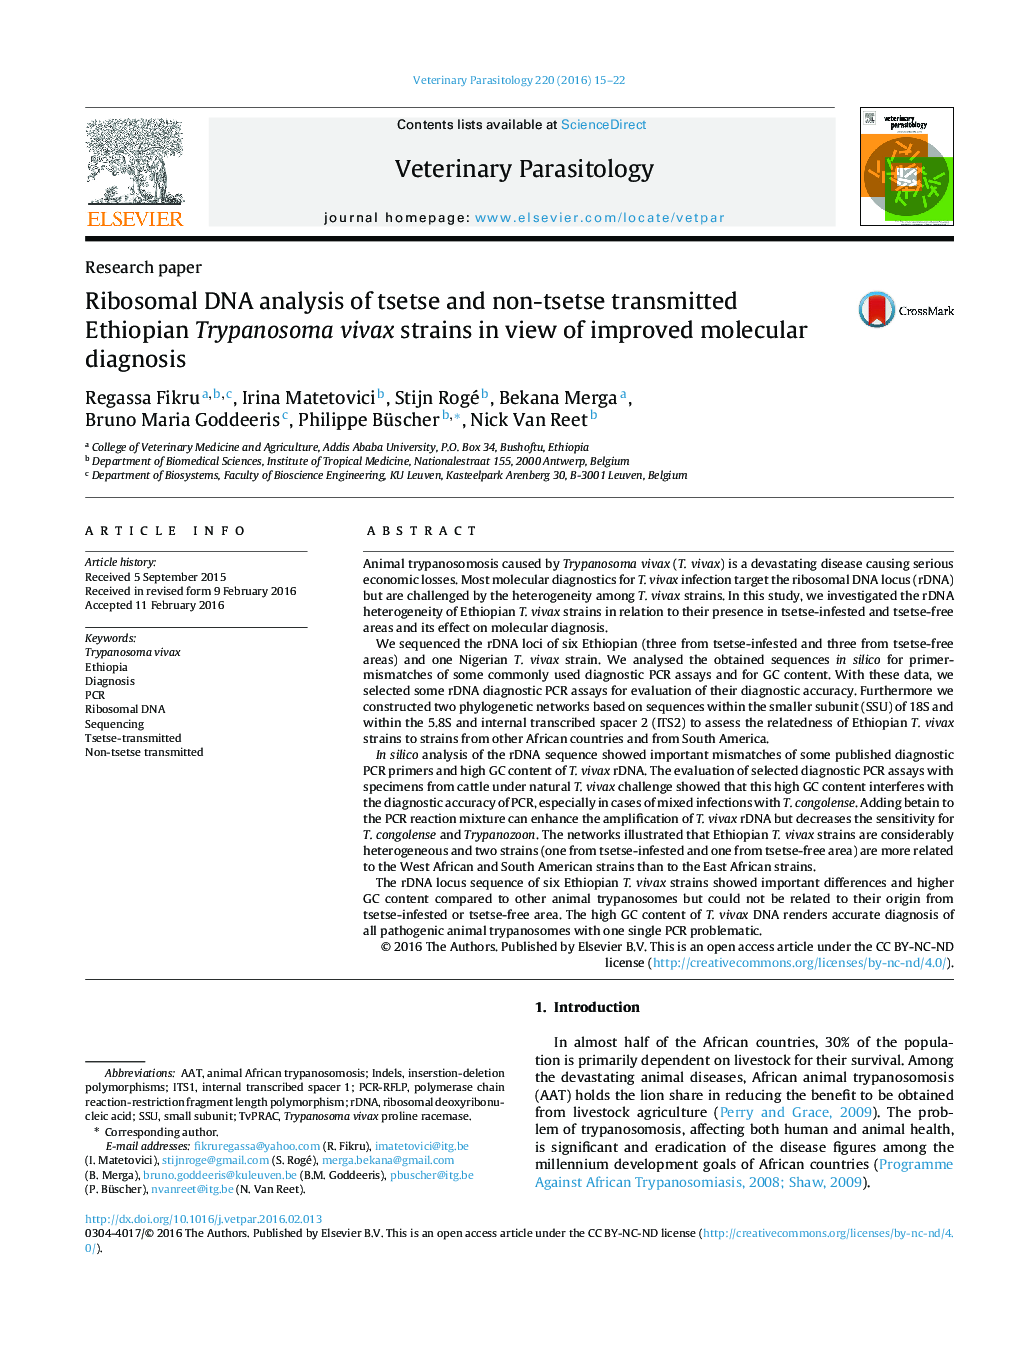 Ribosomal DNA analysis of tsetse and non-tsetse transmitted Ethiopian Trypanosoma vivax strains in view of improved molecular diagnosis